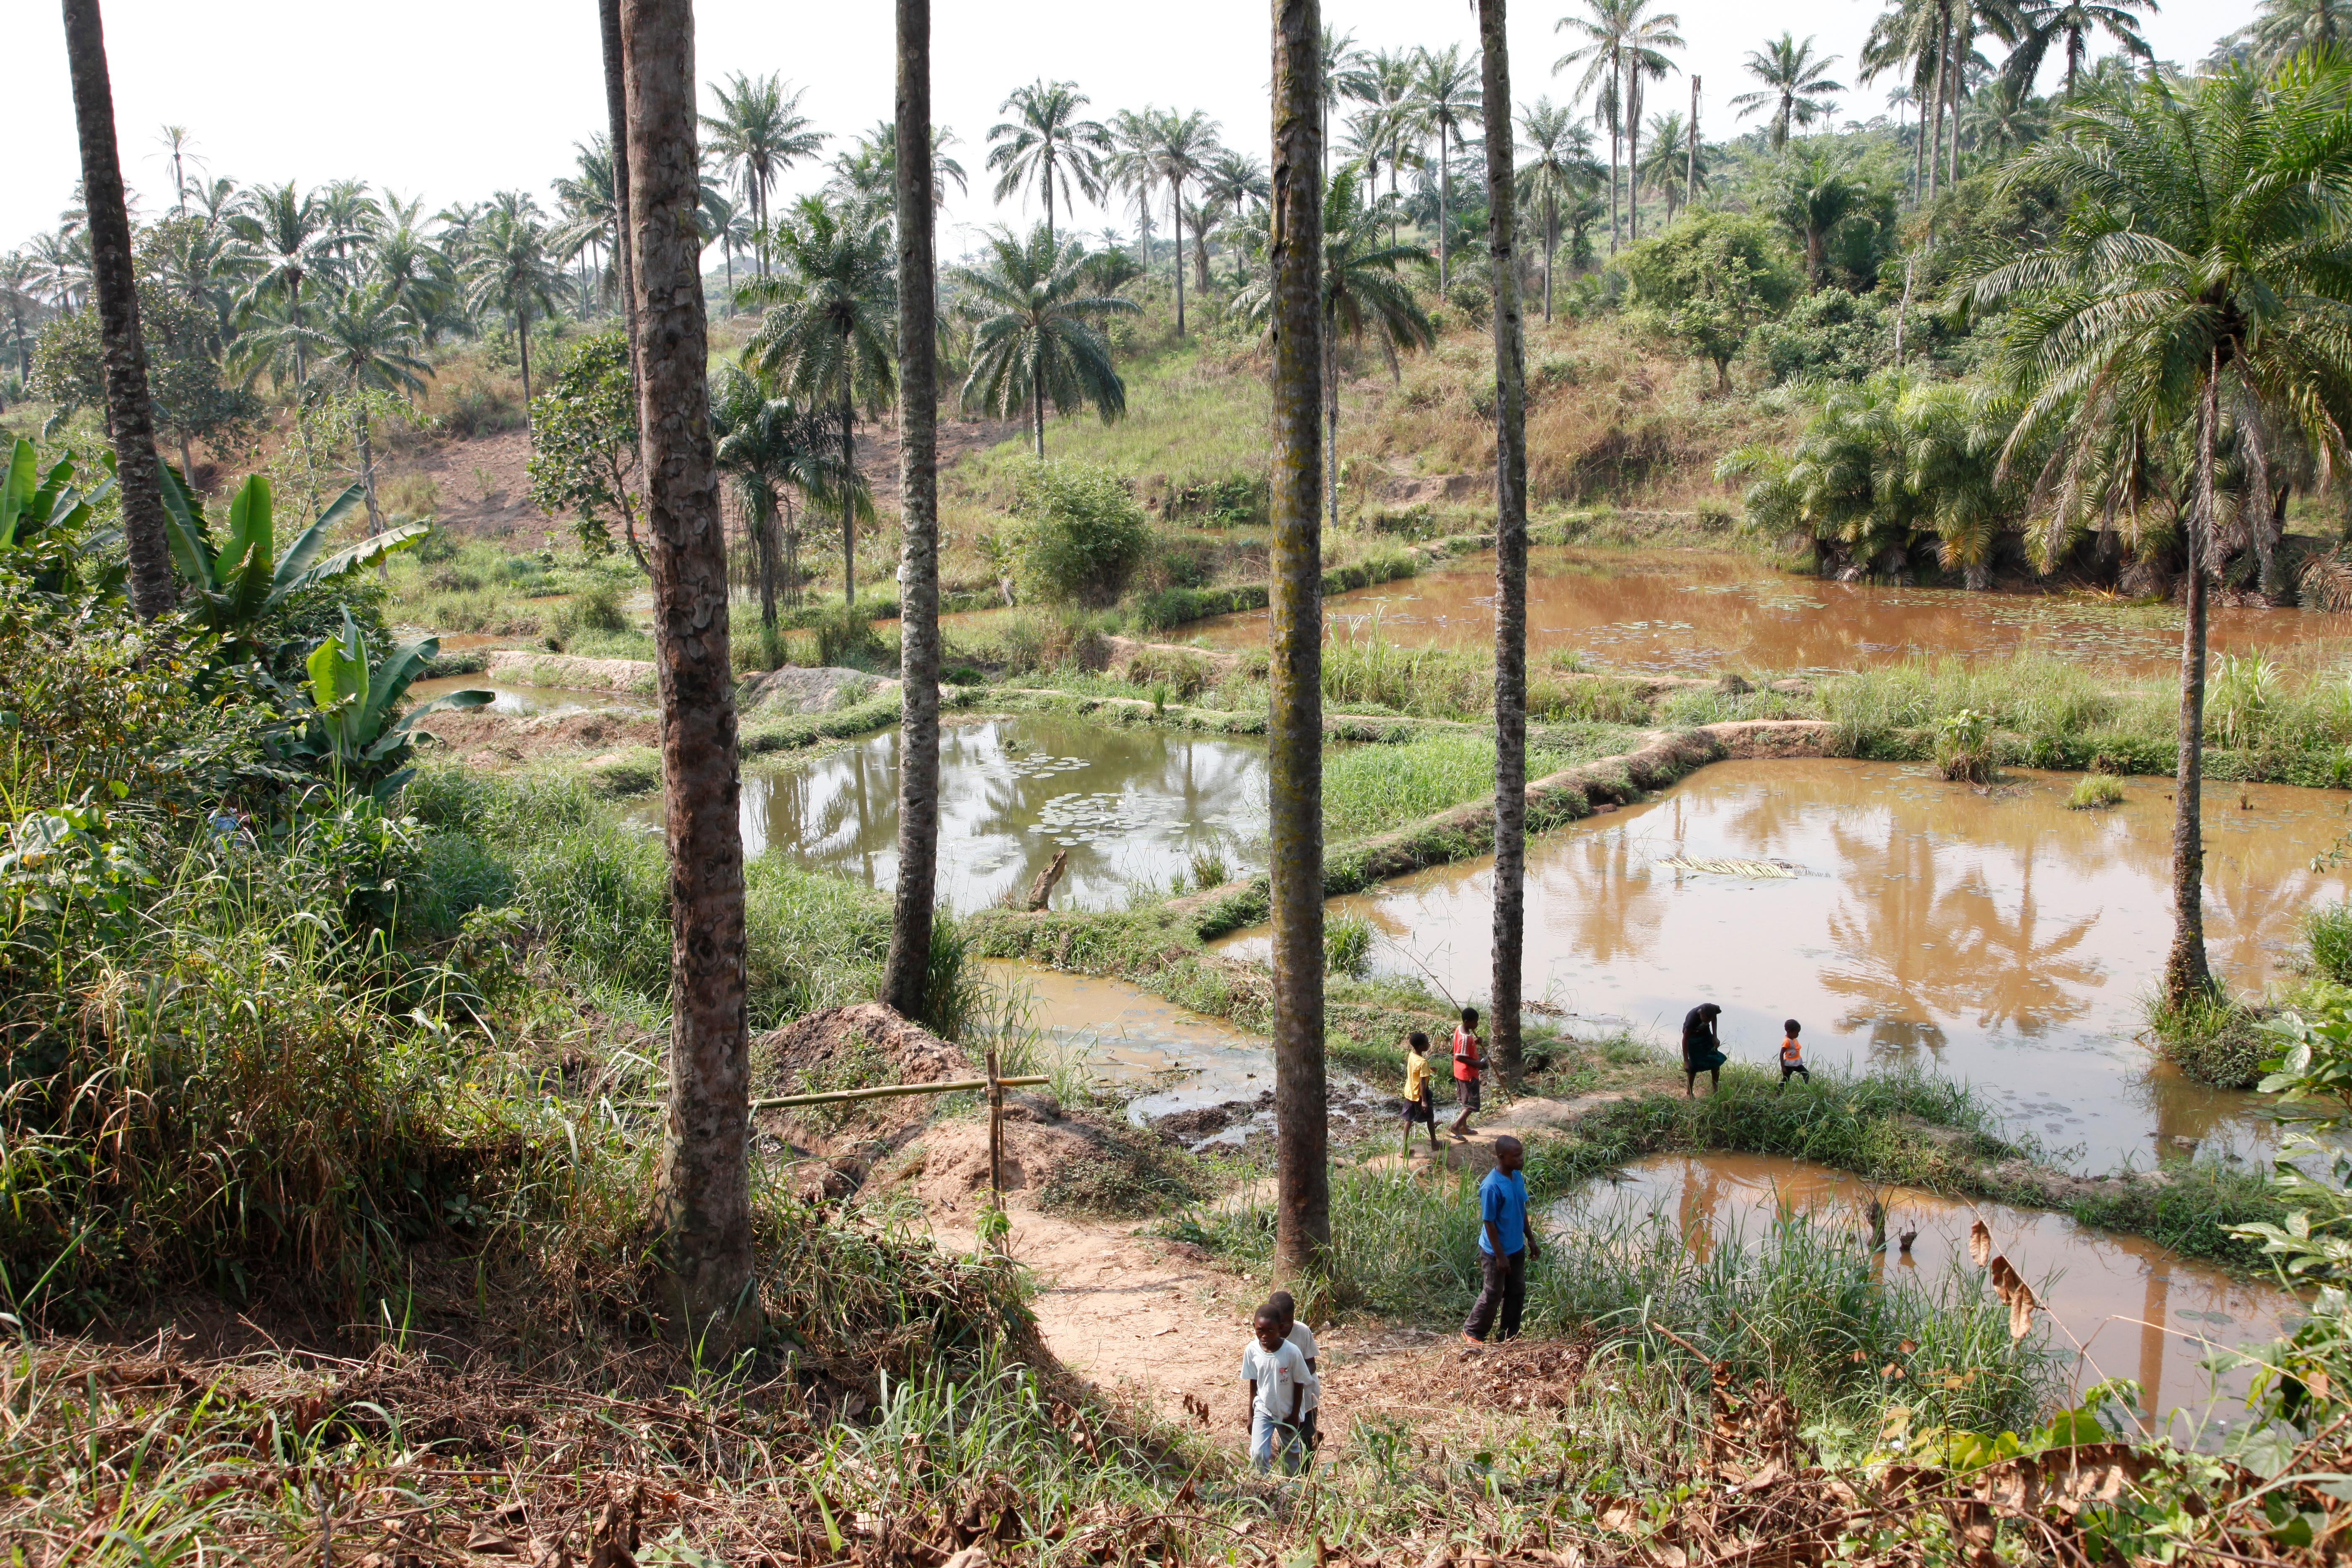 File:Community fish-farming ponds in the rural town of Masi Manimba, DRC  (7609946524).jpg - Wikipedia